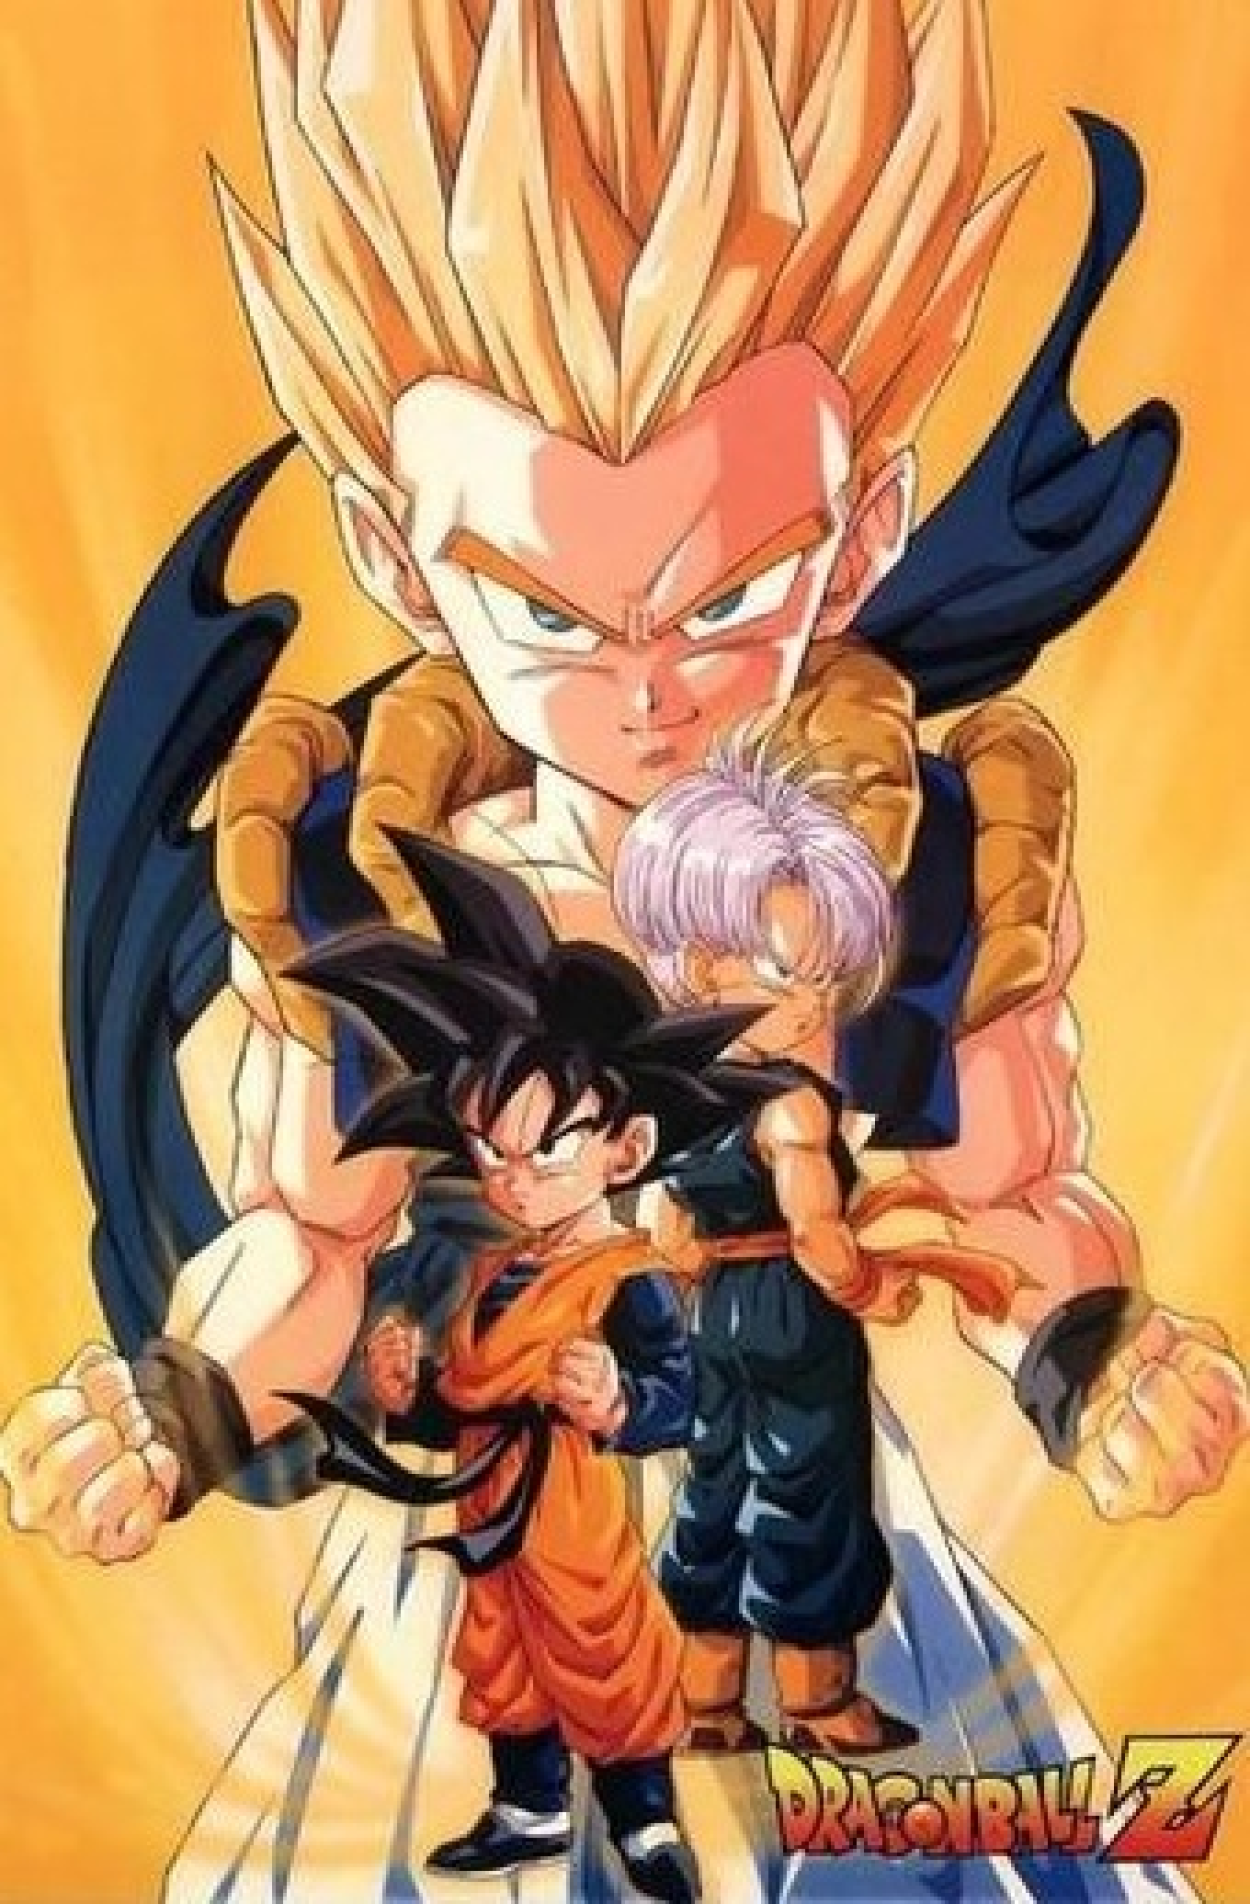 Como está o ator Justin Chatwin, o Goku do filme Dragon Ball